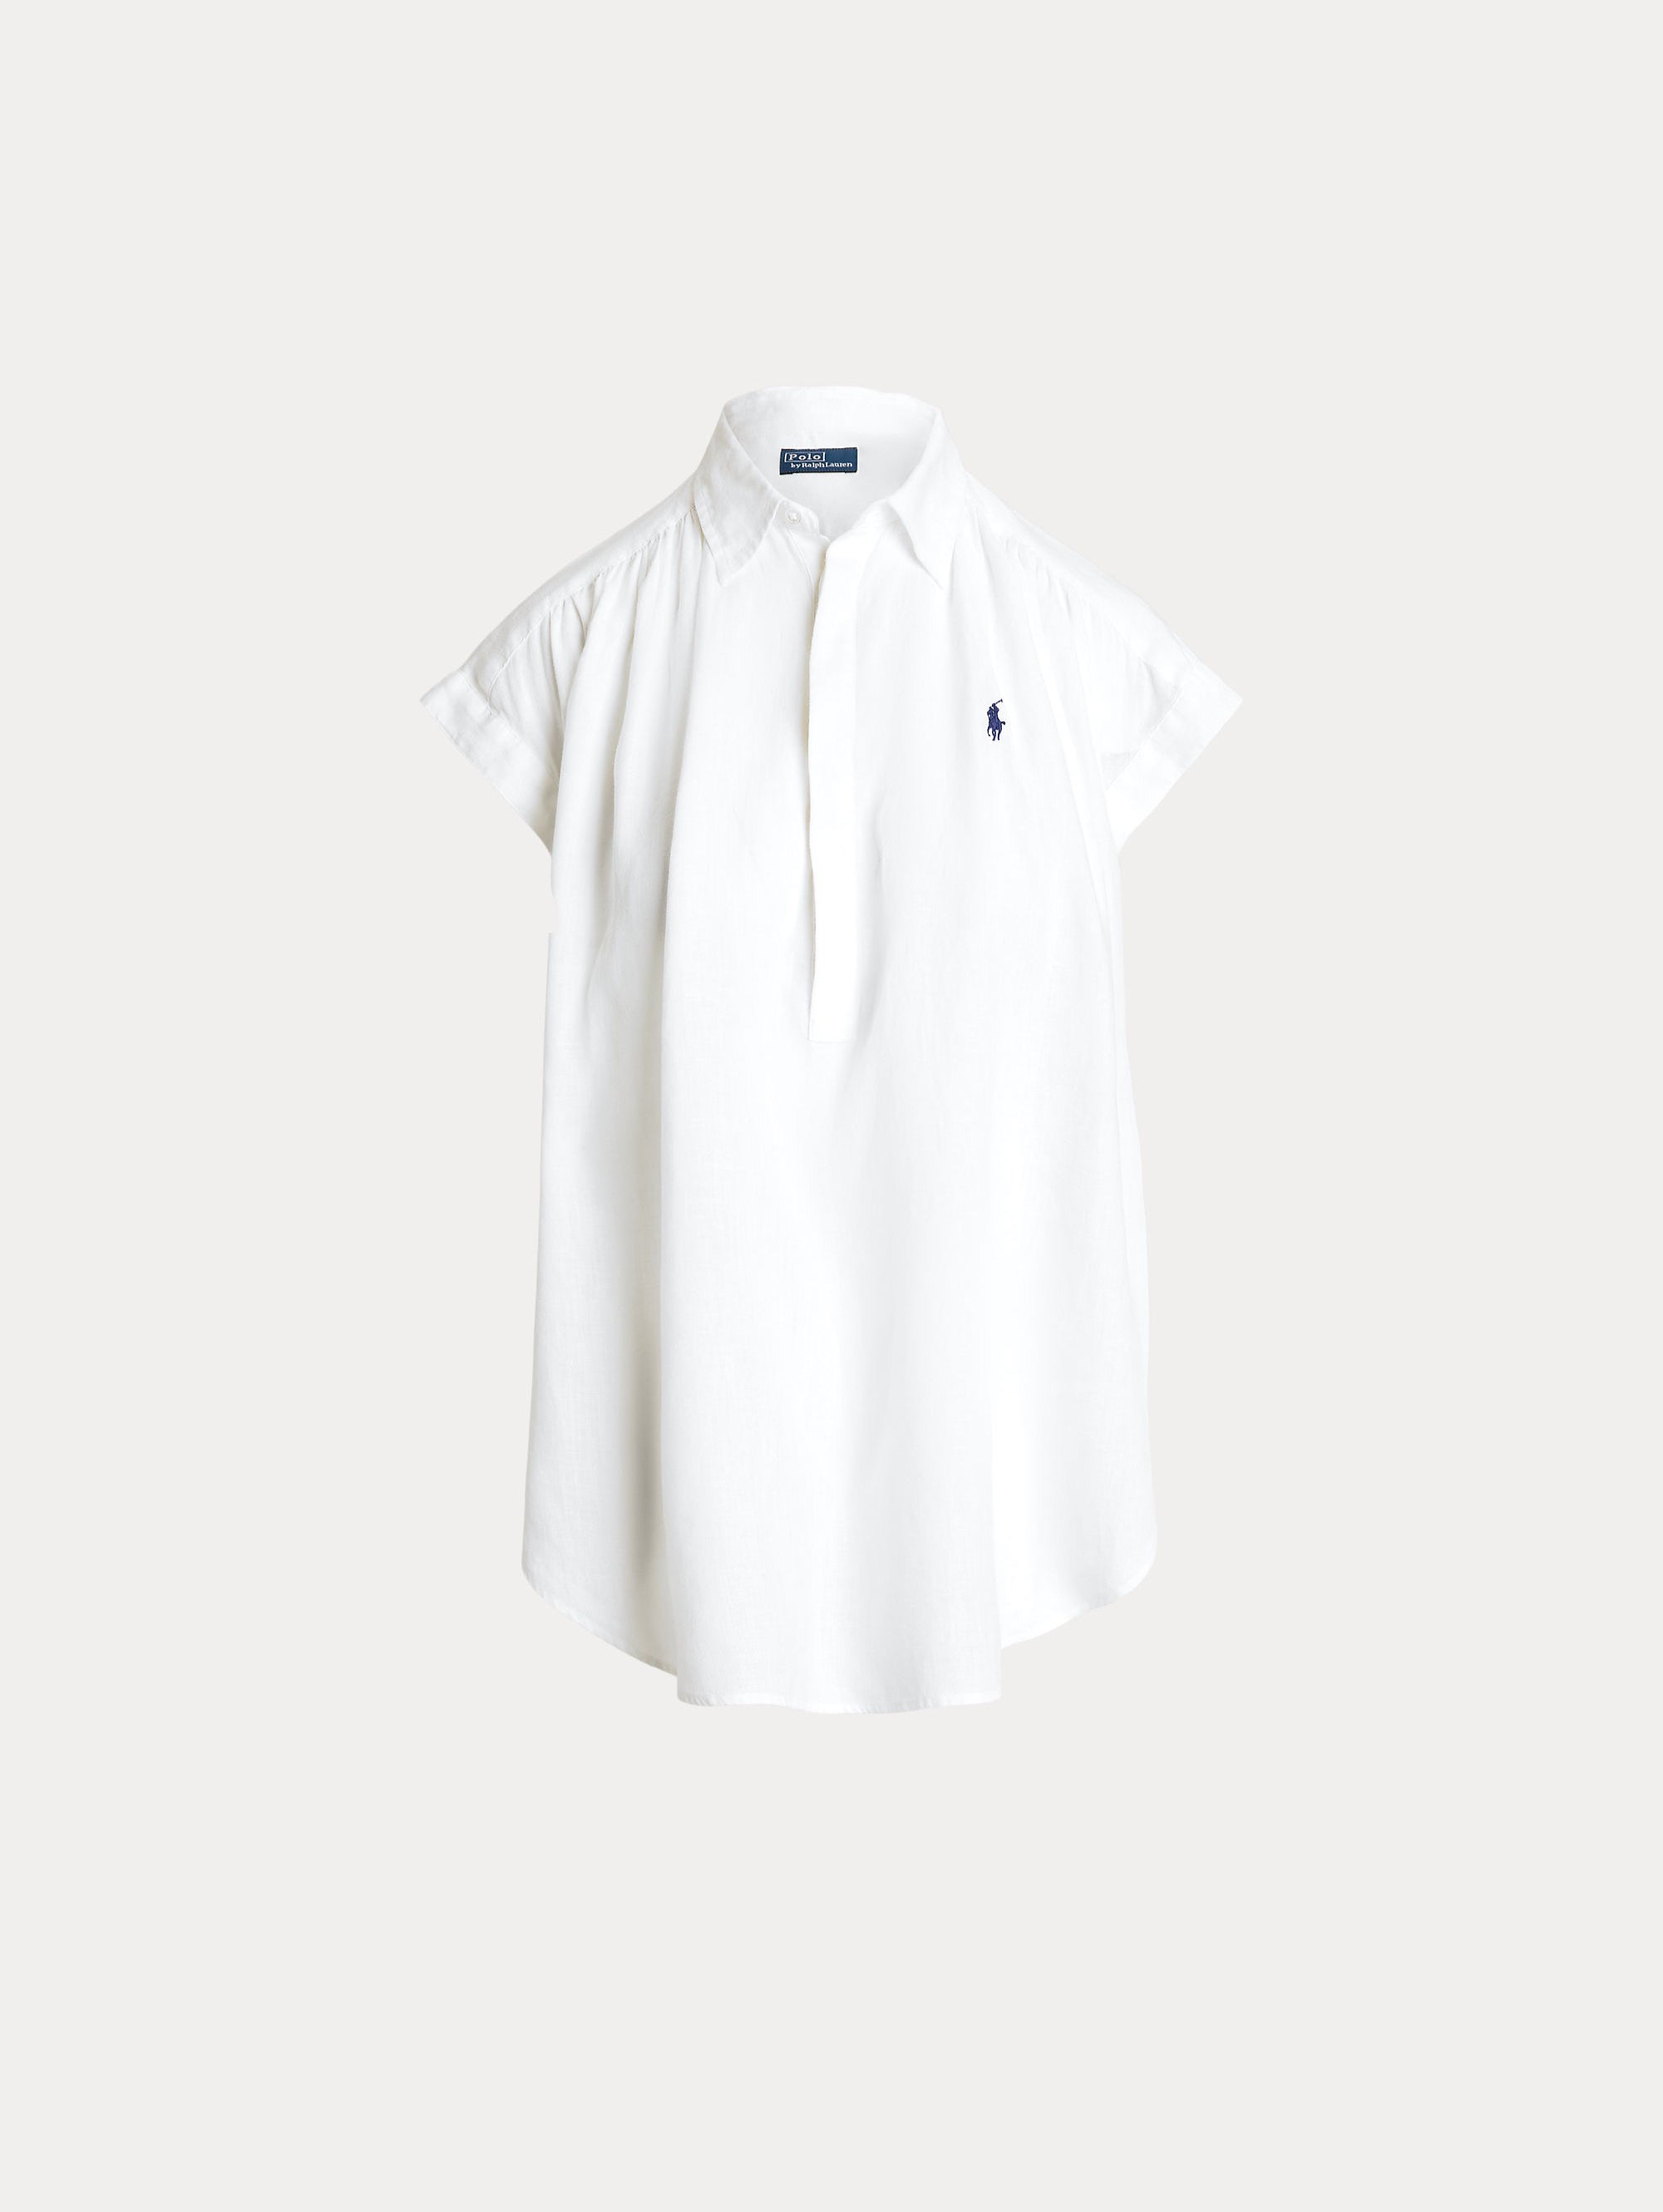 White Linen Shirt with Ruffles